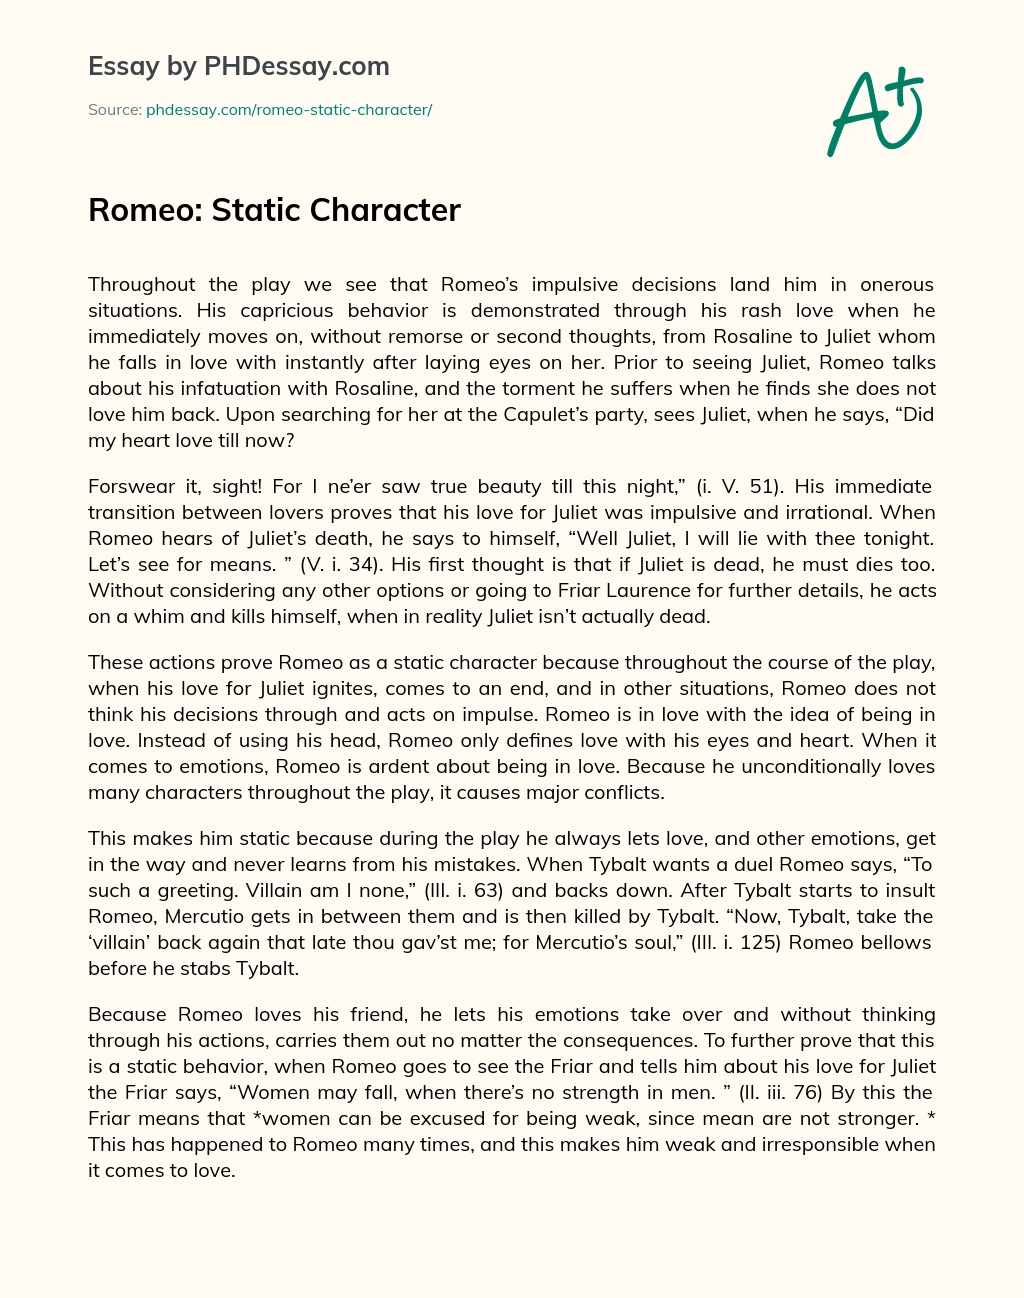 Romeo: Static Character essay